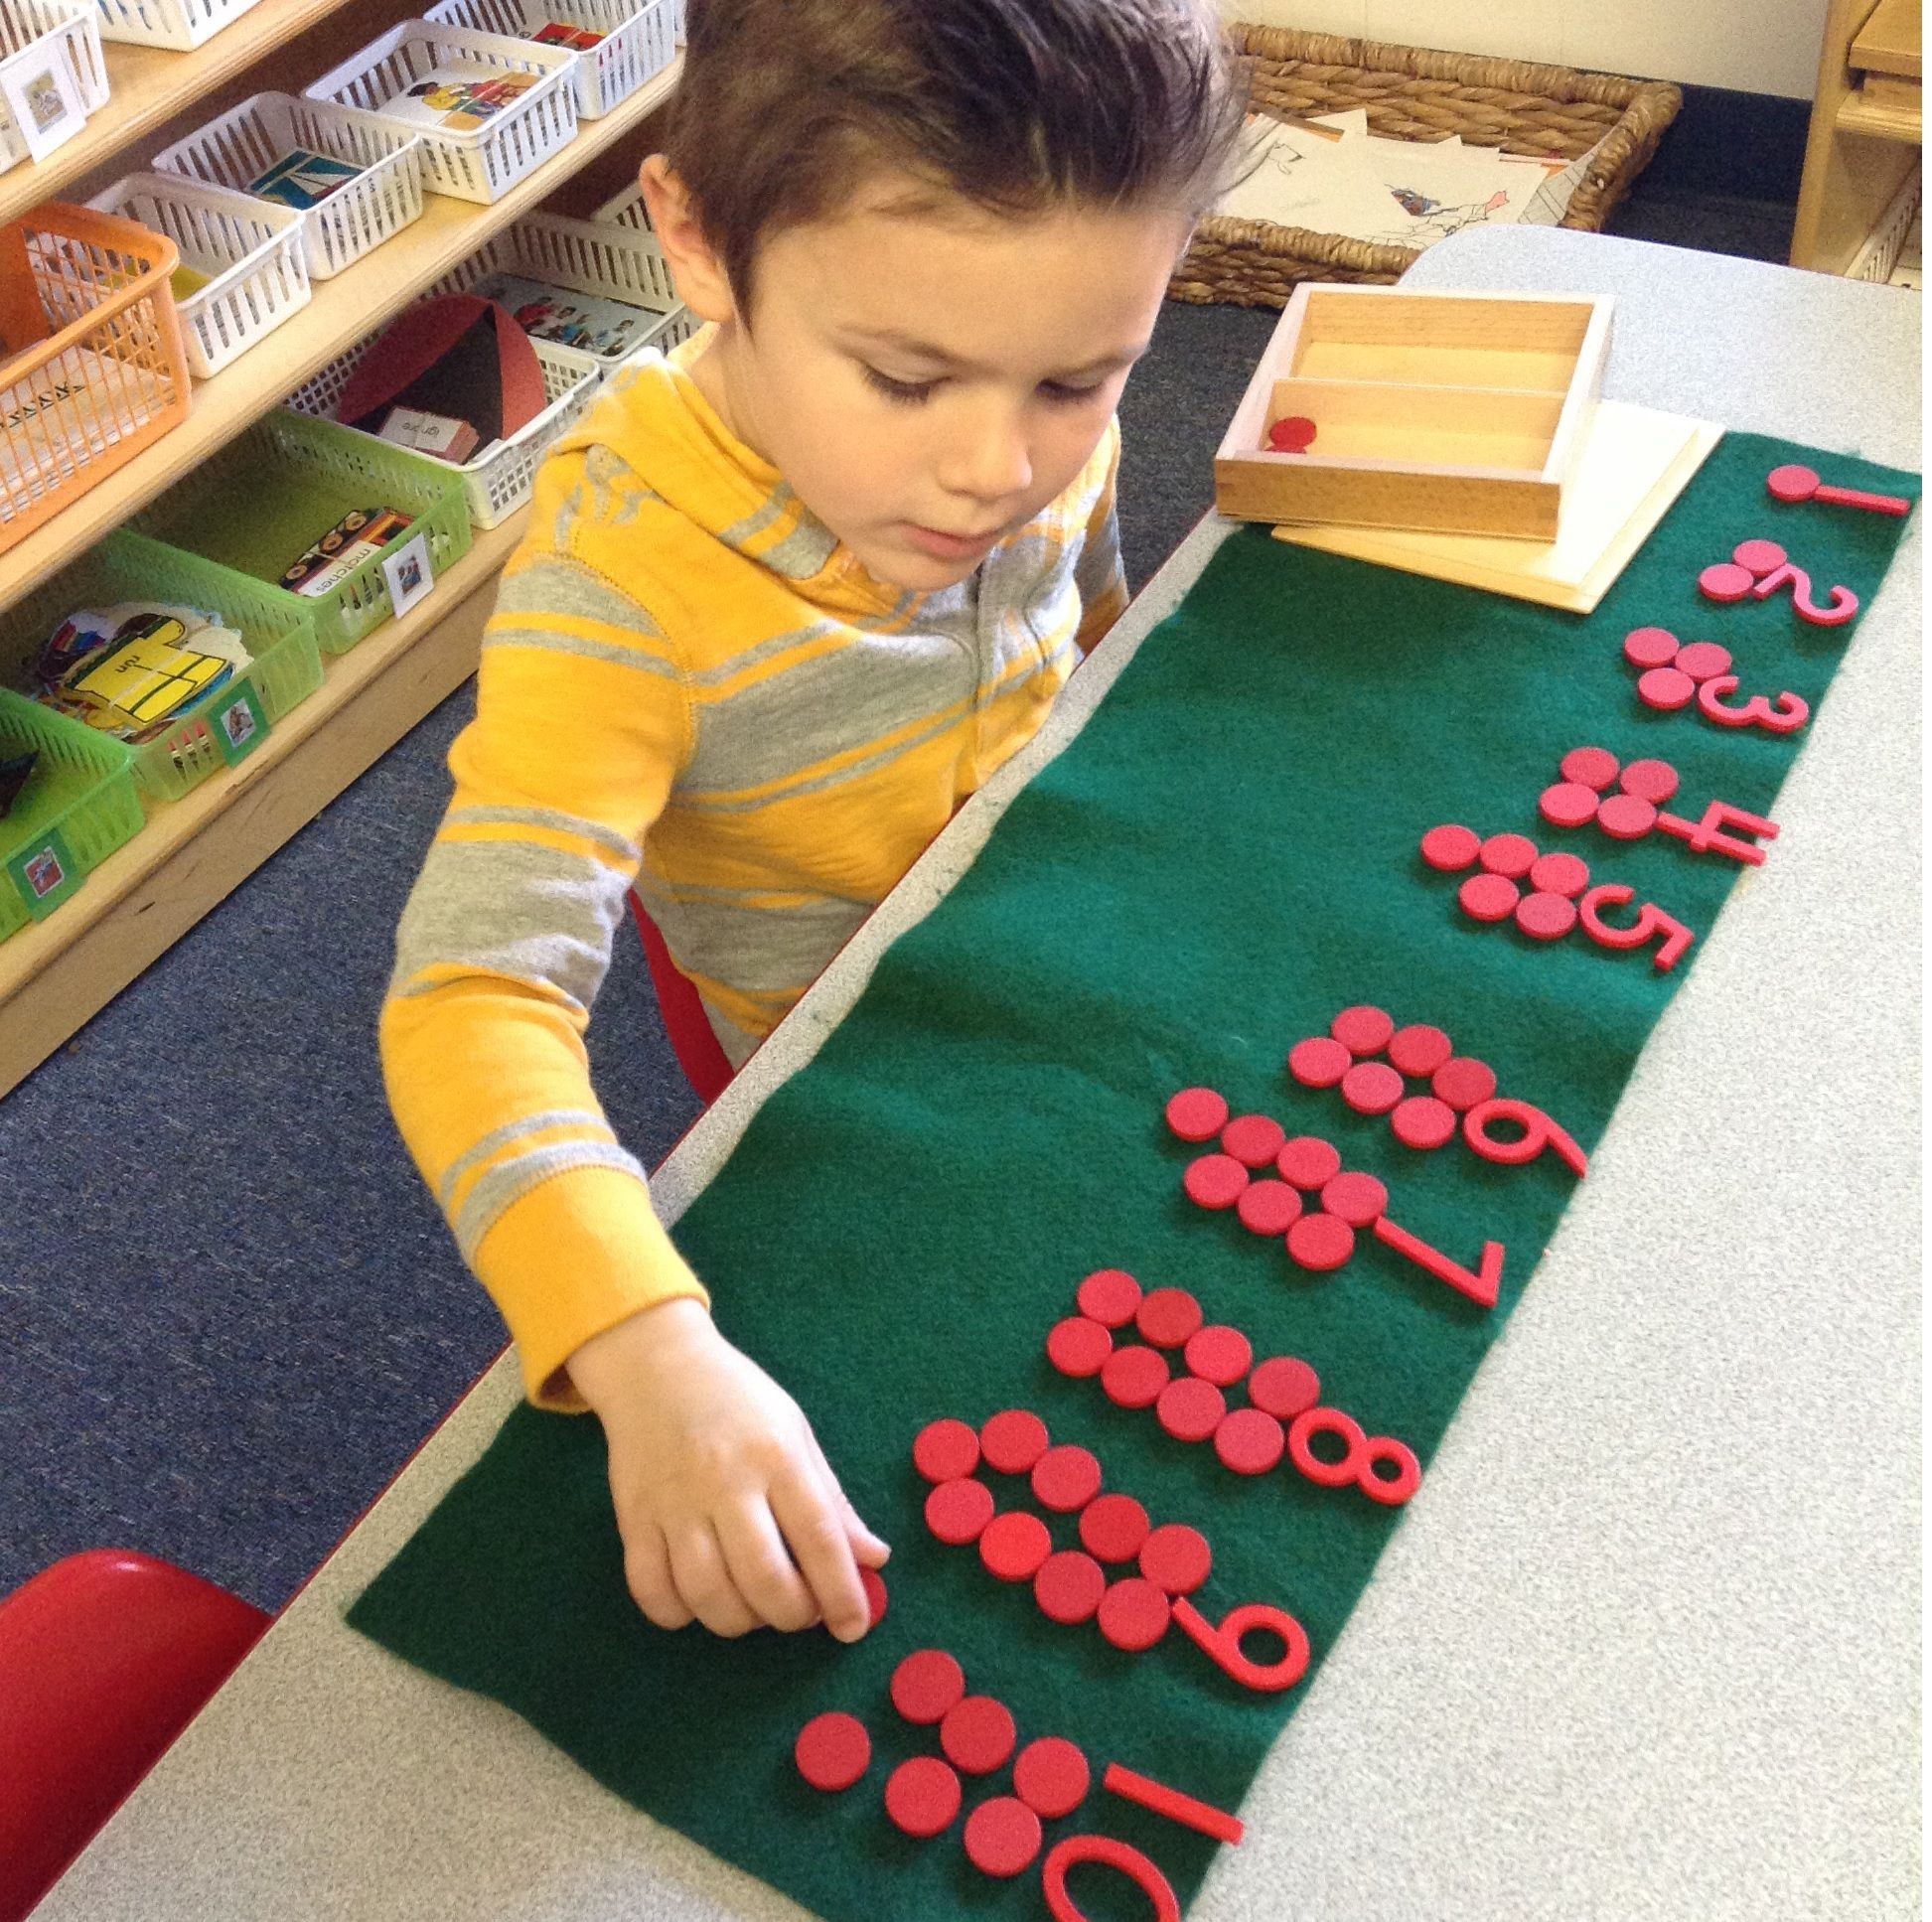 Montessori Checkerboard Mat Multiplication Work Mat Montessori